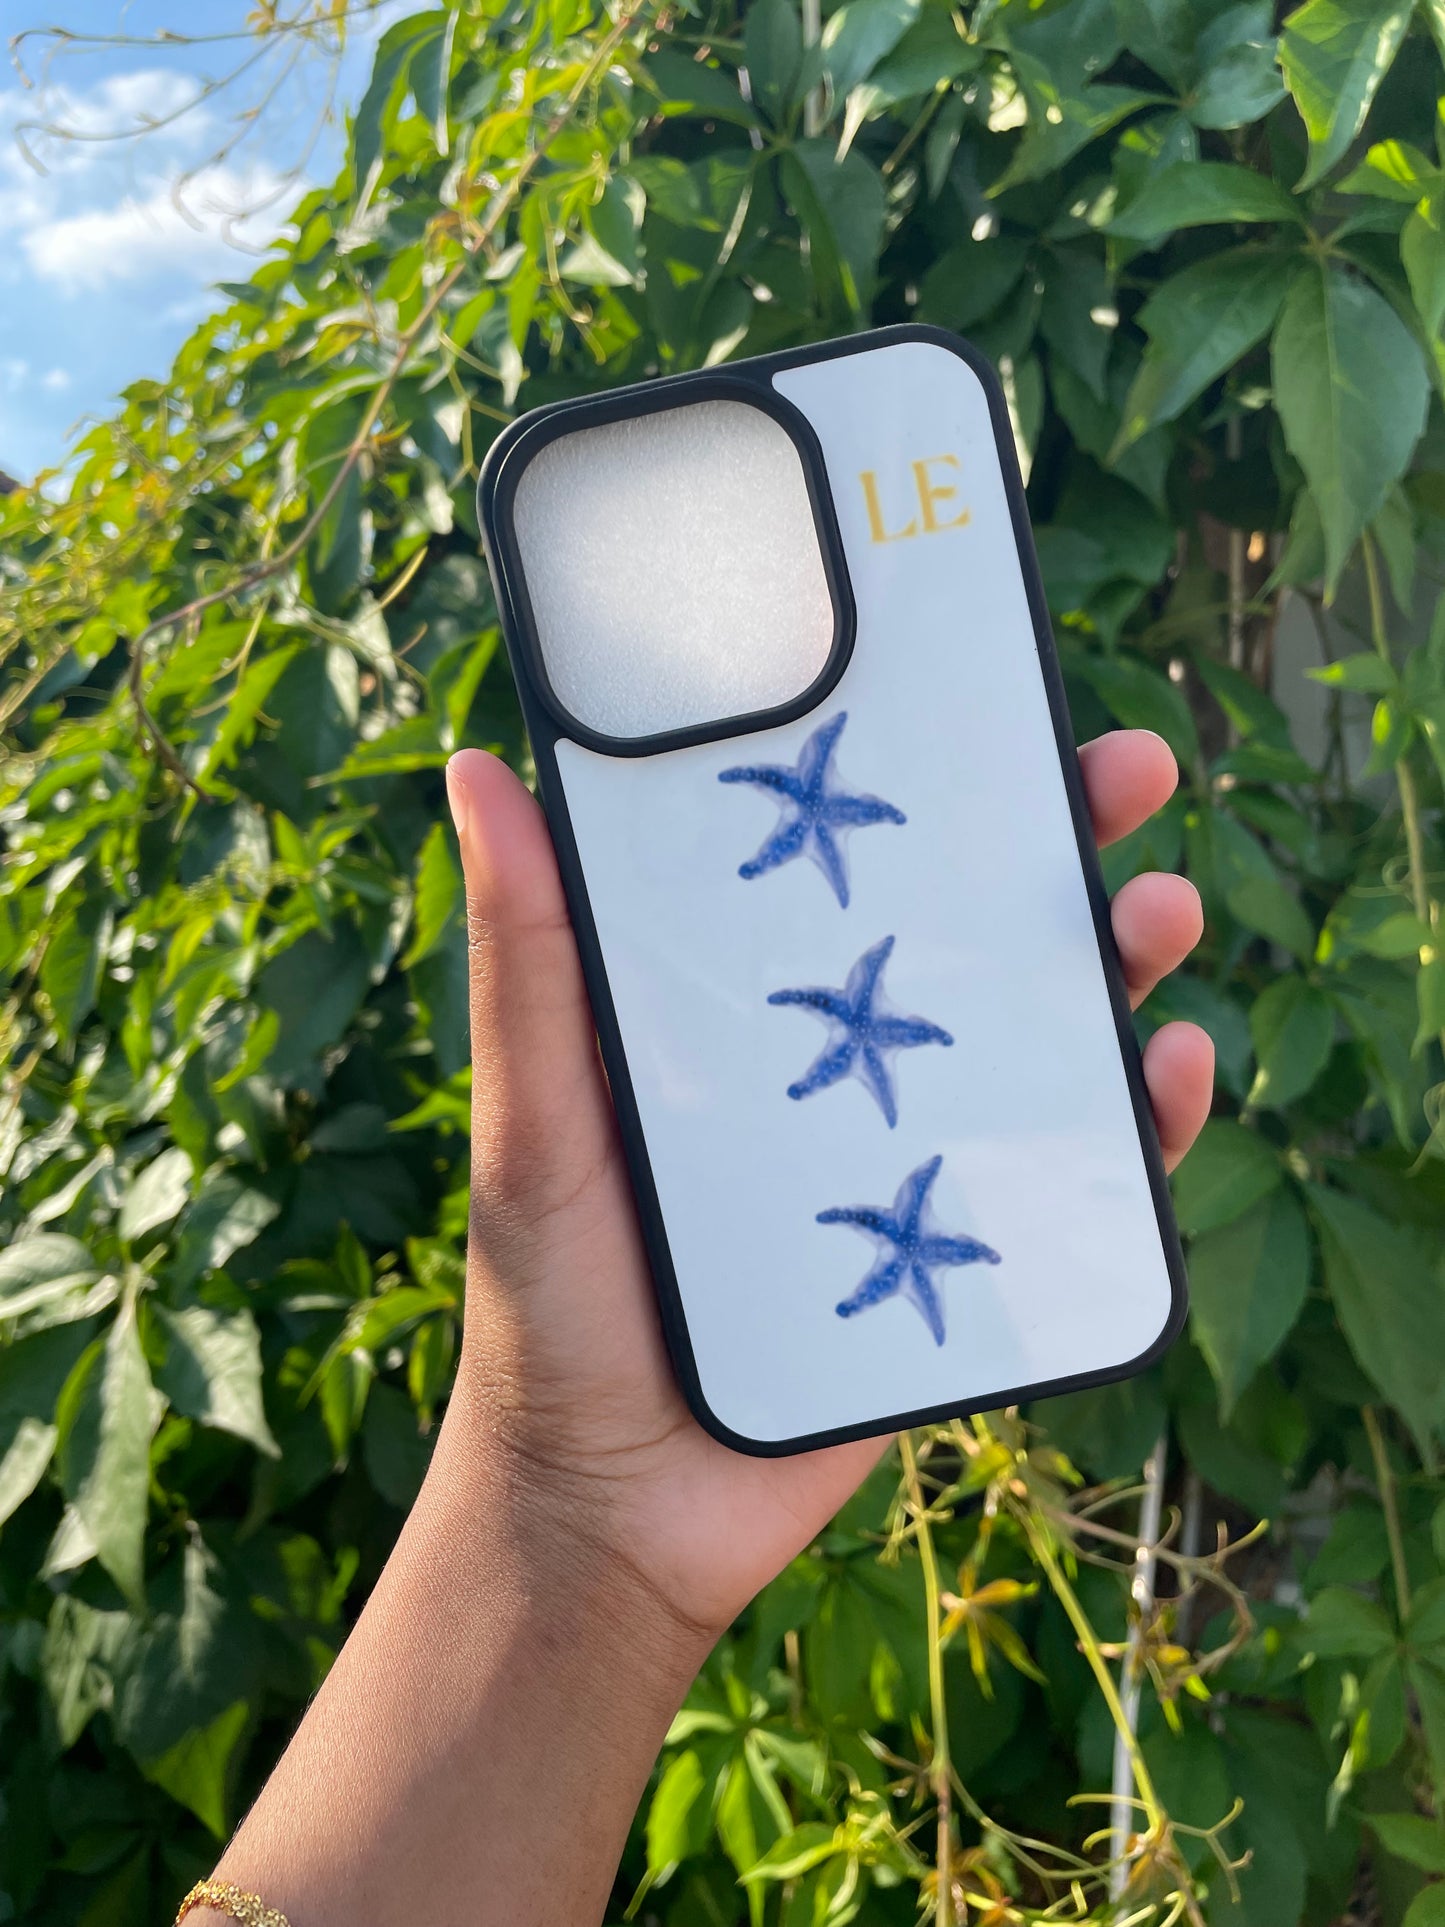 Blue starfish with Custom initials Phone case